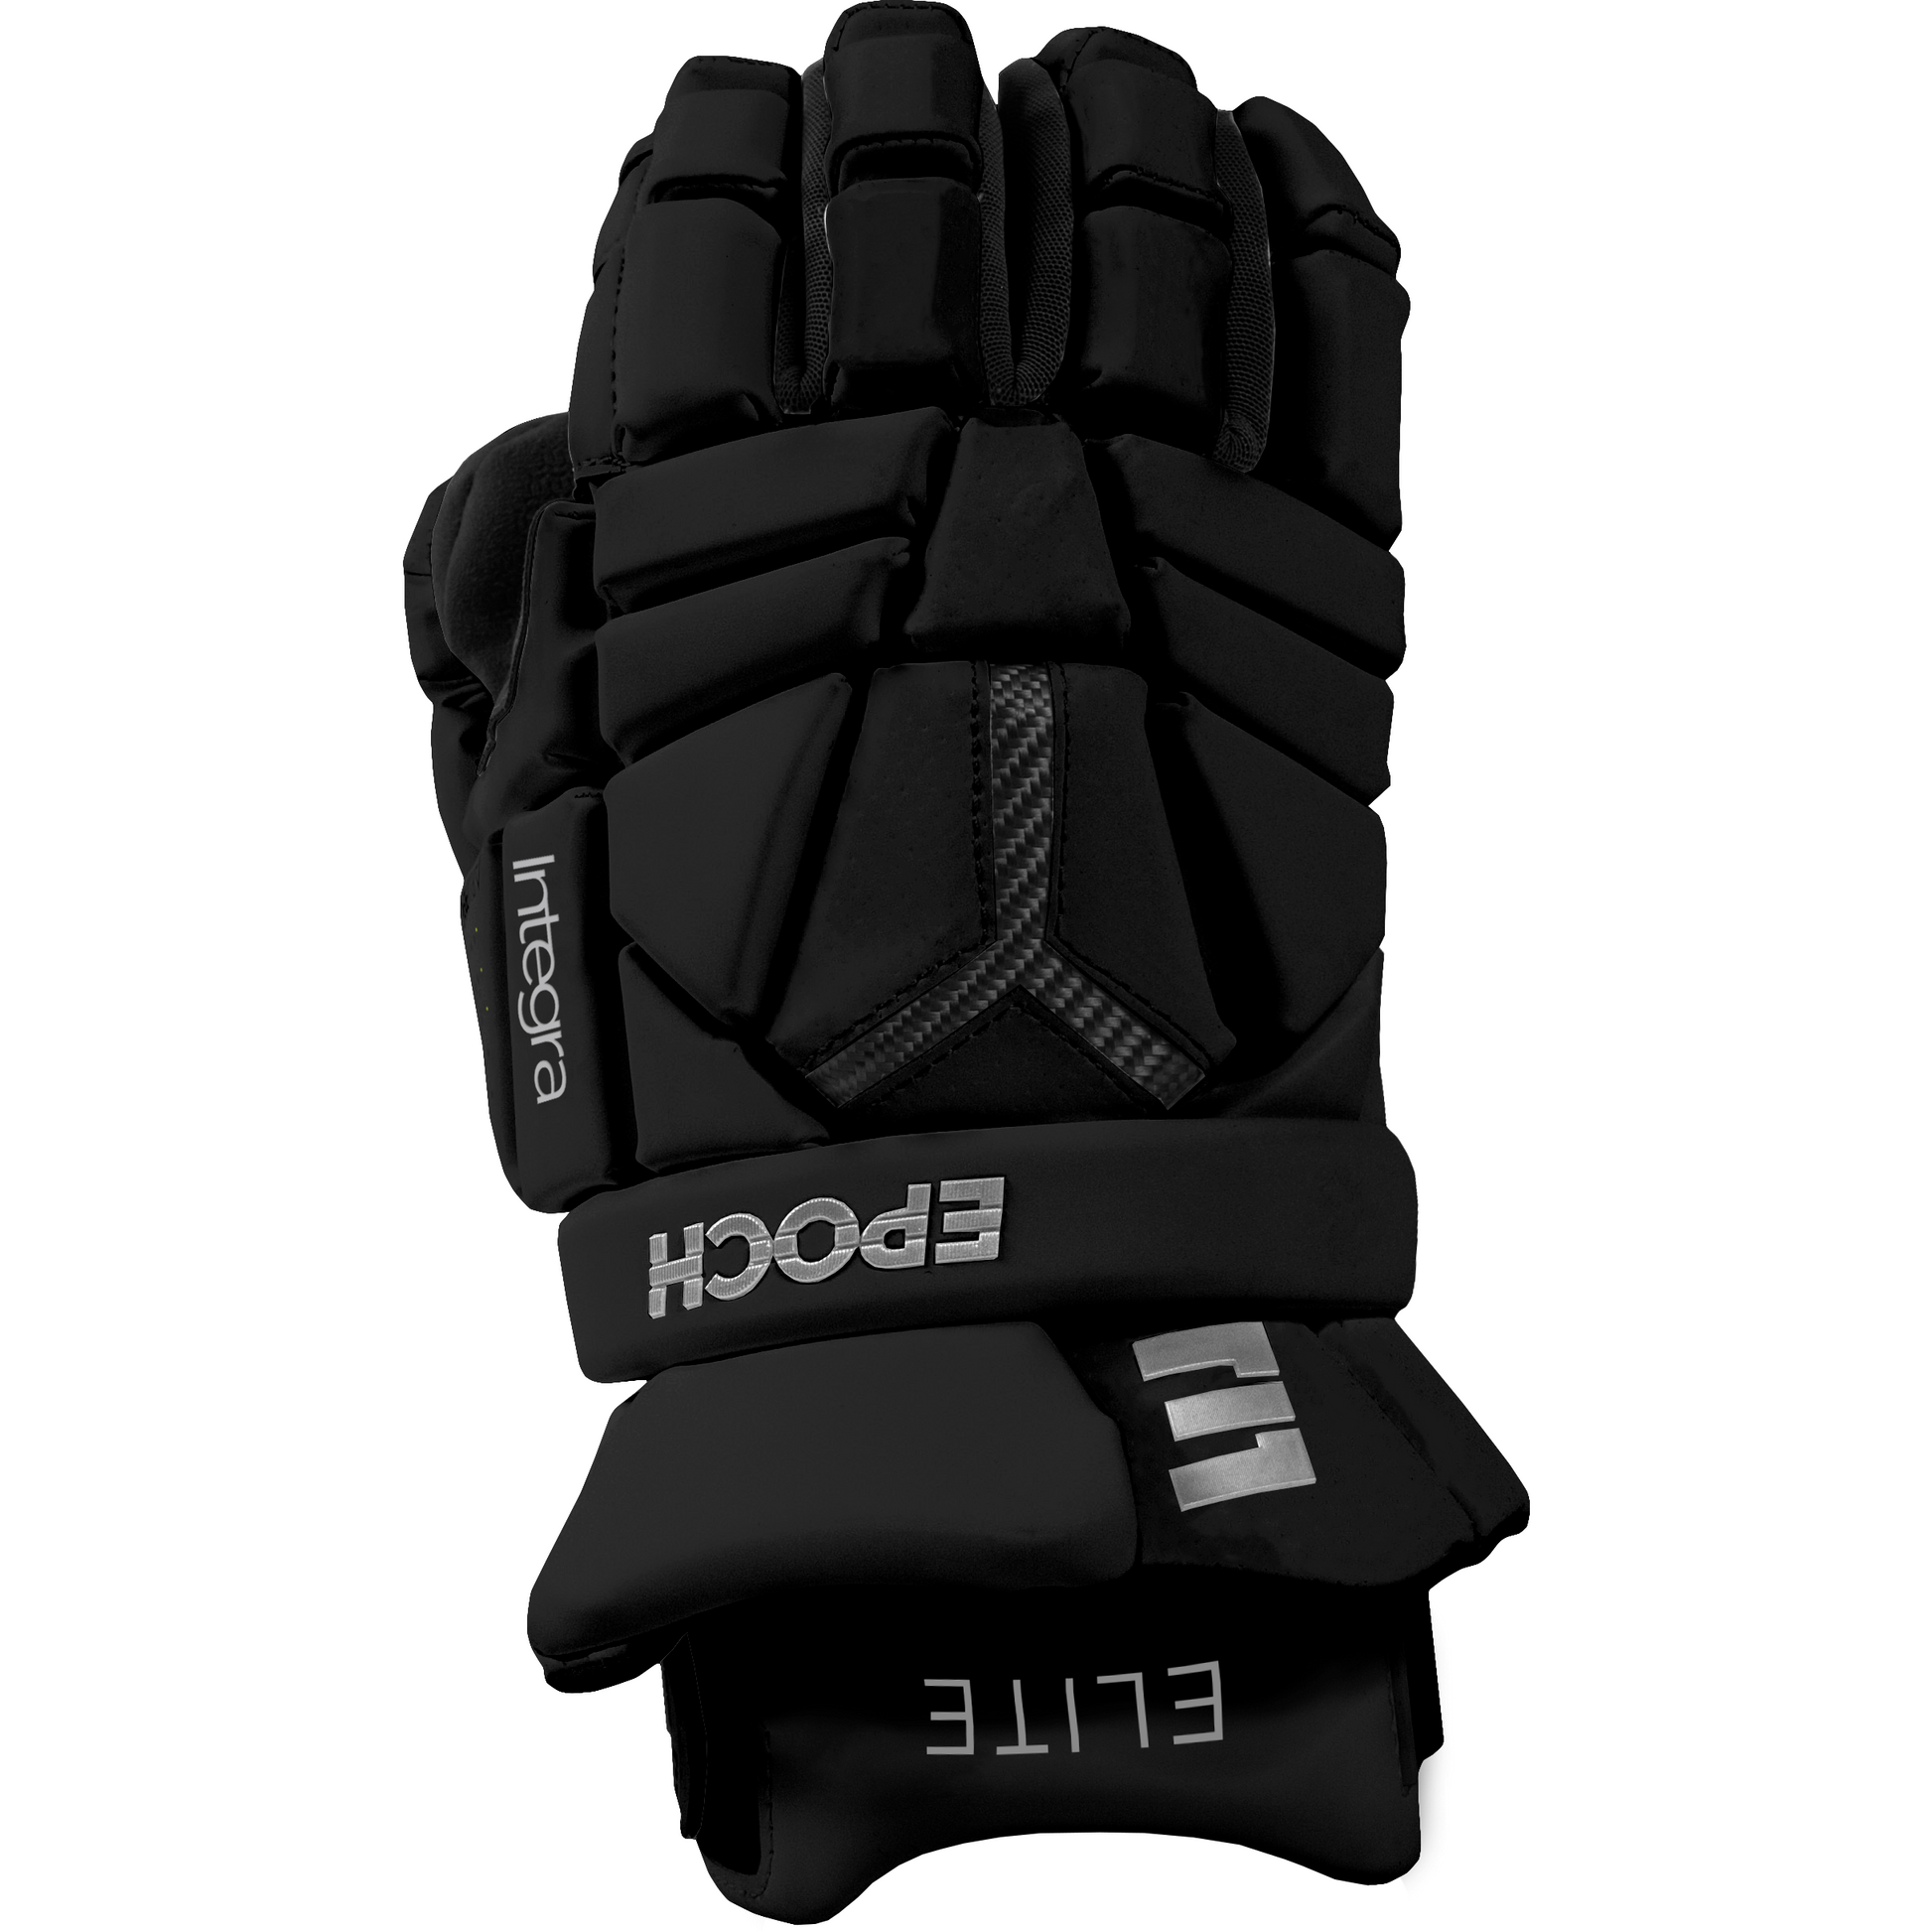 Epoch Integra Elite Lacrosse Gloves Black